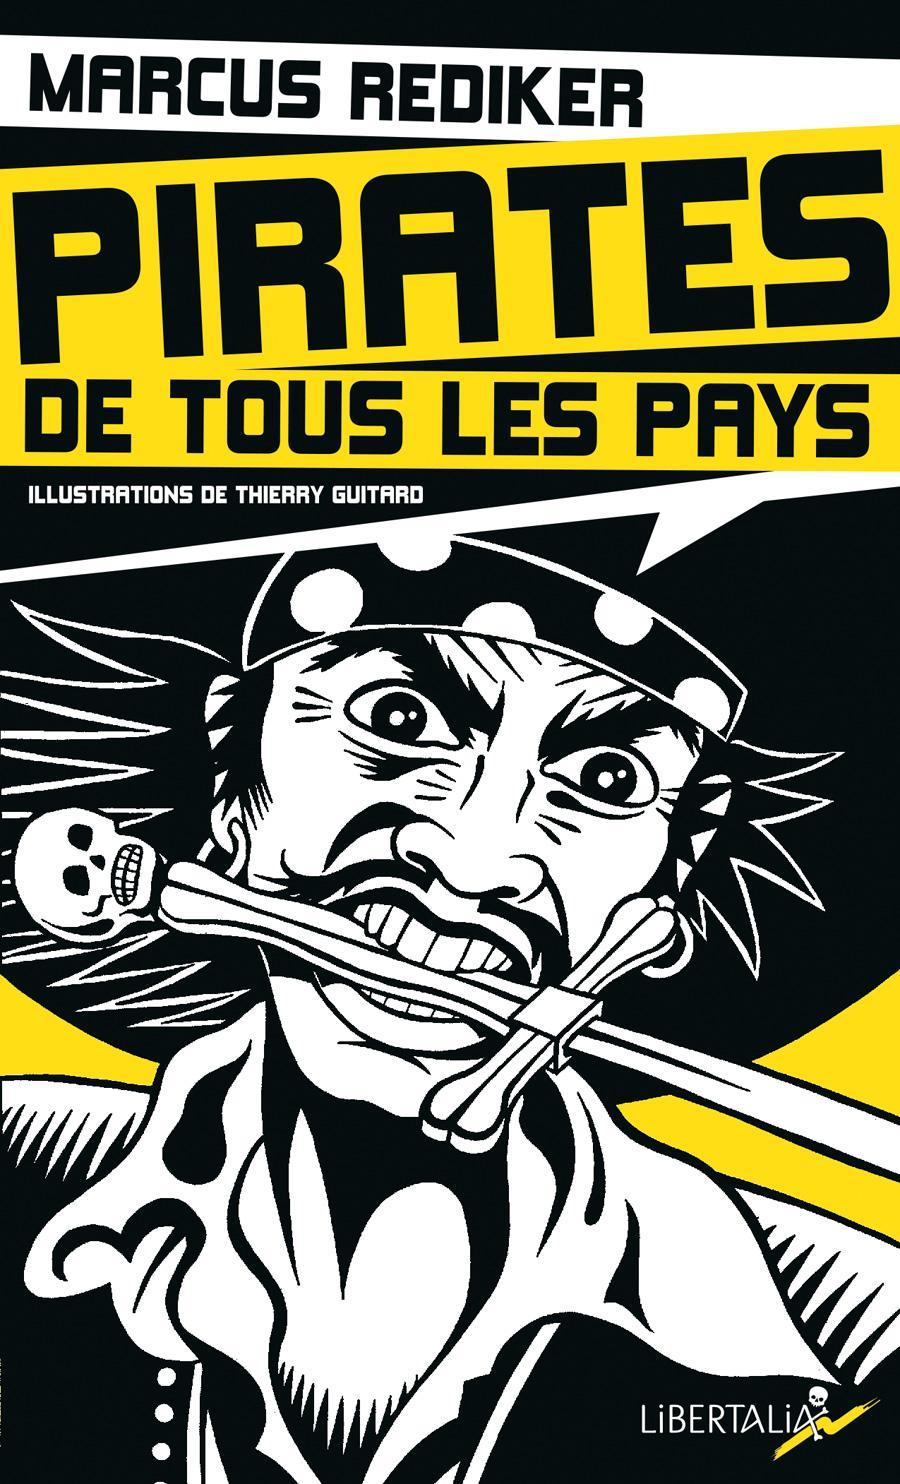 Pirates de tous les pays (French language, 2017, Libertalia)